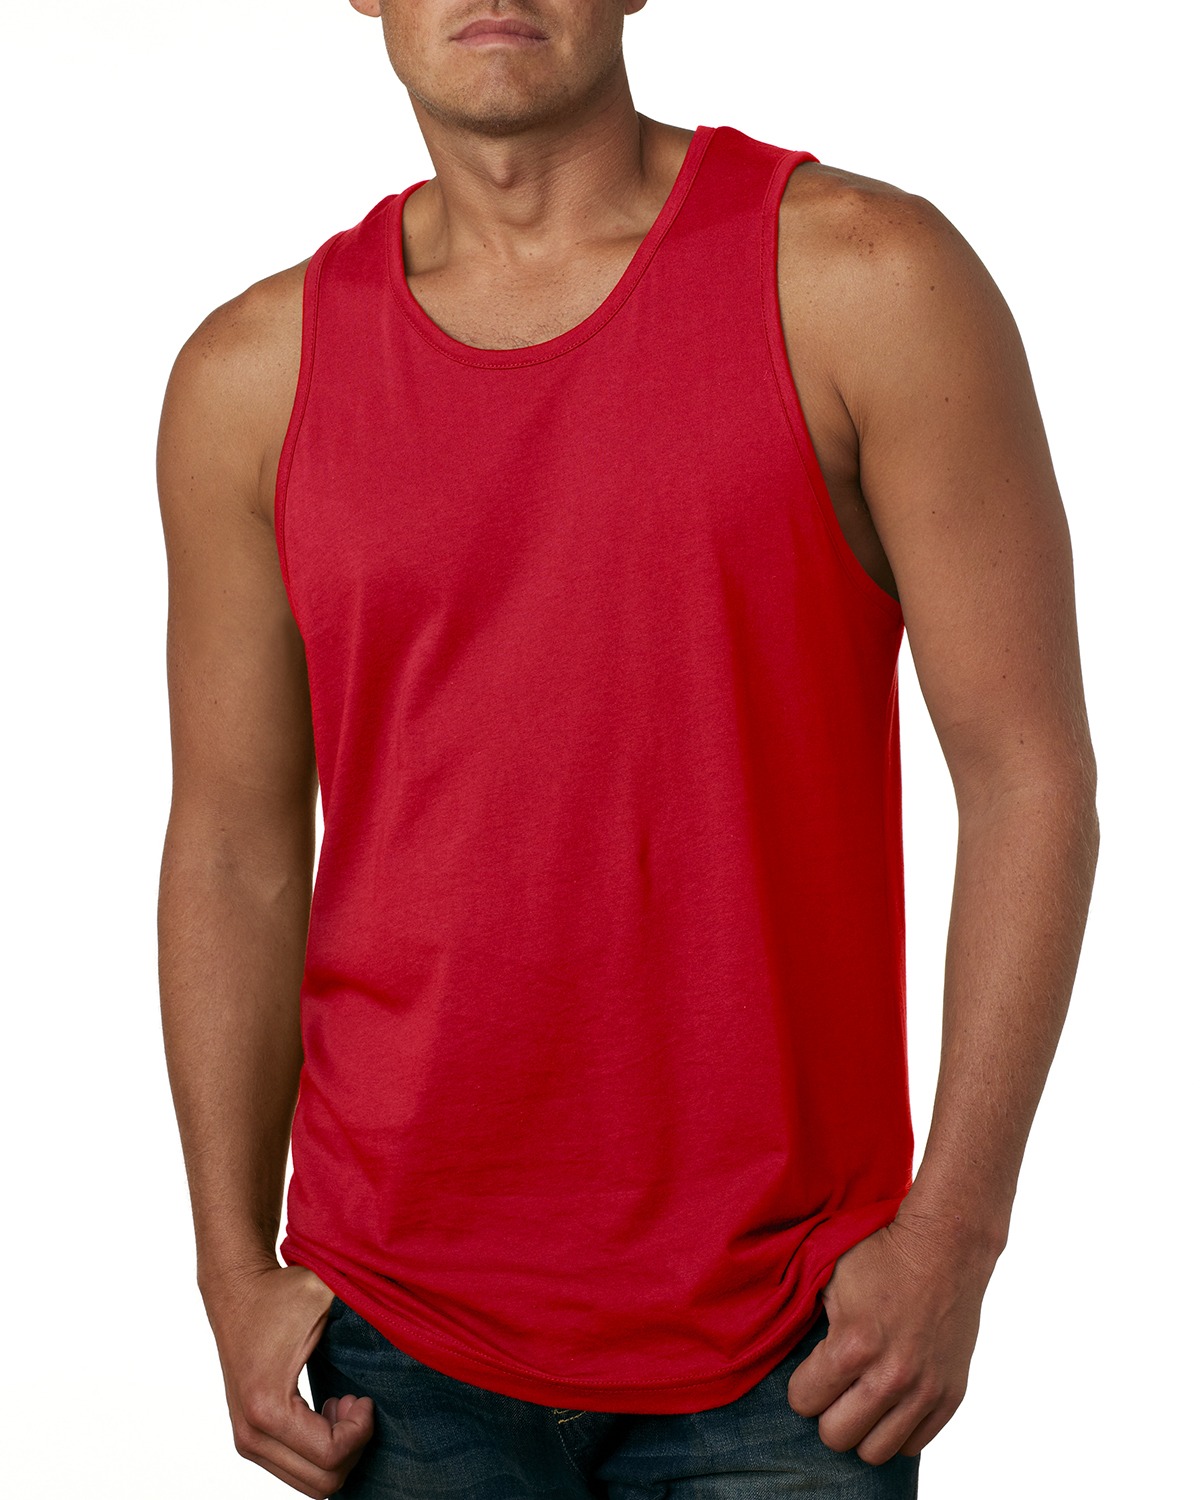 https://images.shirtspace.com/fullsize/6XUYTIx%2FBHmrlotShZZ3Qg%3D%3D/109431/5043-next-level-3633-men-s-cotton-tank-front-red.jpg